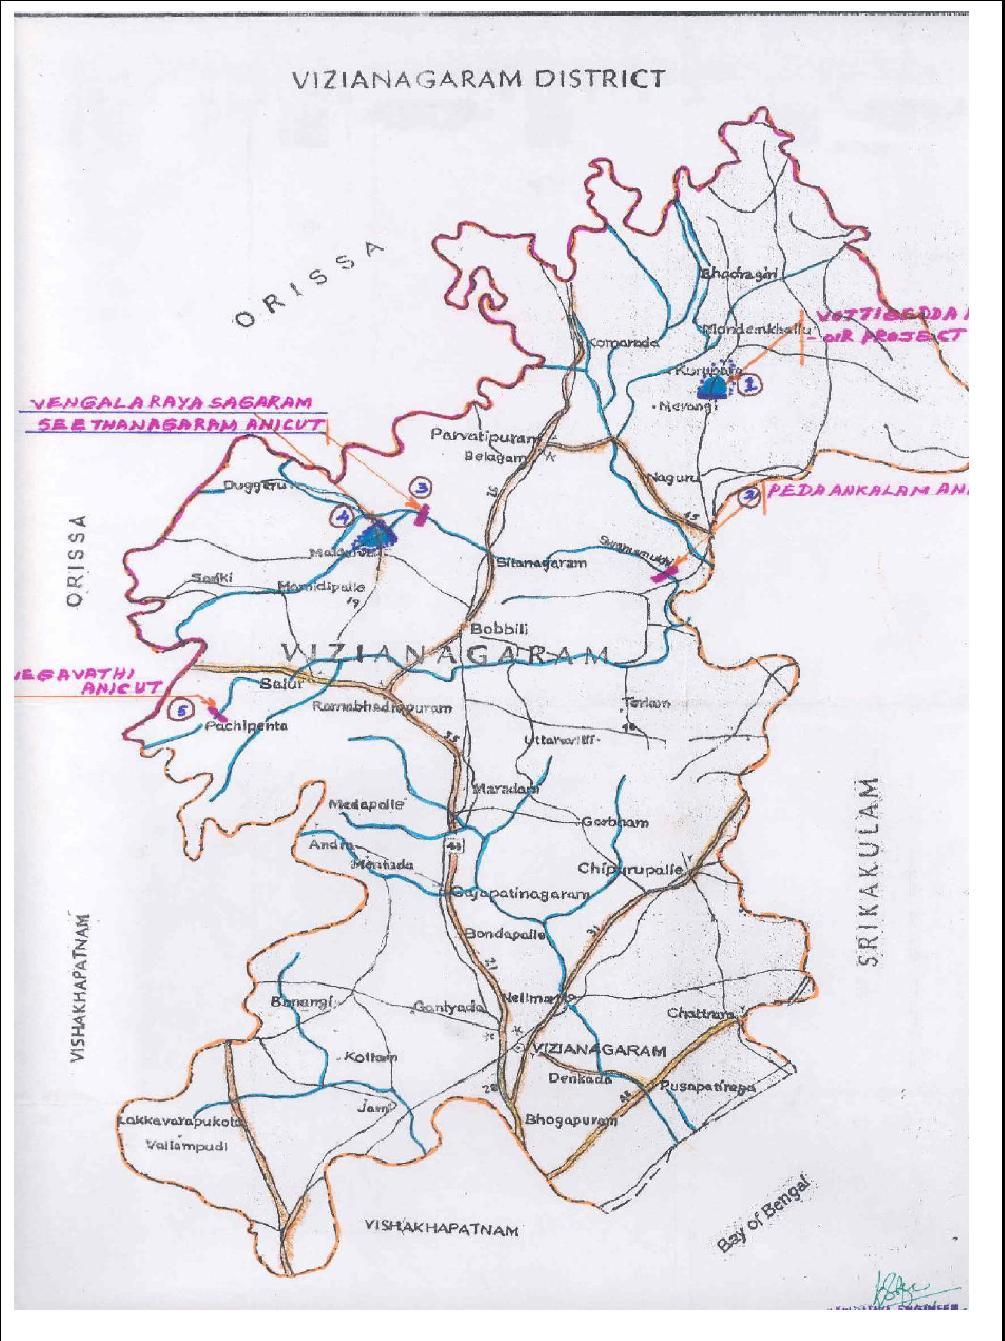 ESAIJ, 6(4) 2011 districts of Andhra Pradesh, India., adjoining Bay of Bengal.